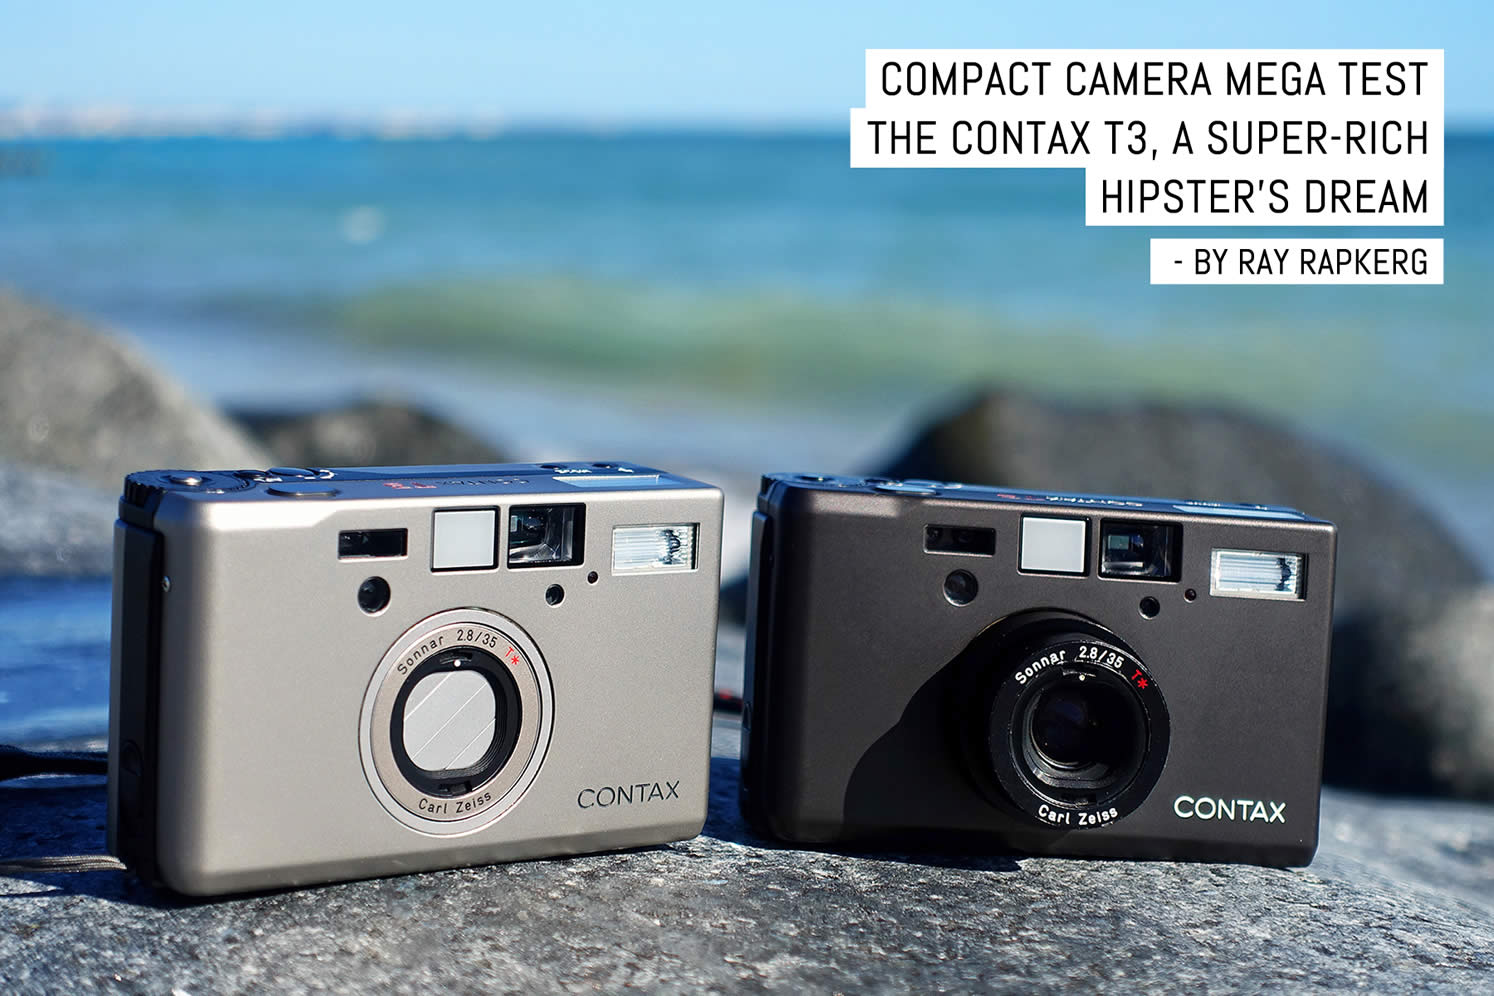 Compact camera mega test: The Contax T3, a super-rich hipster’s dream